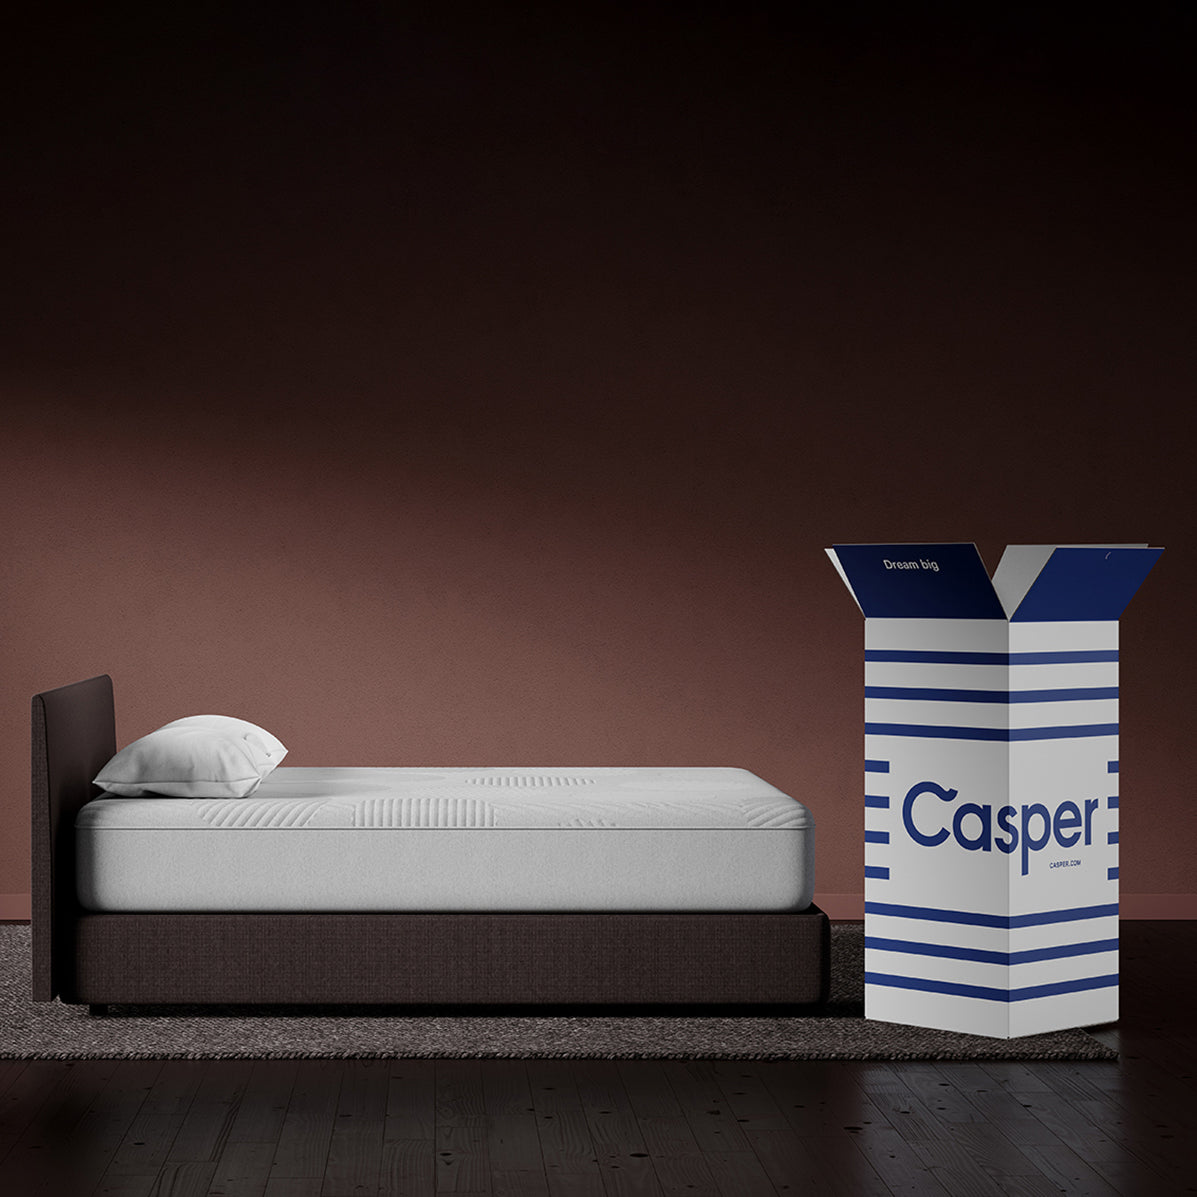 Casper Nova Hybrid Mattress On Bed In Bedroom With Box Packaging